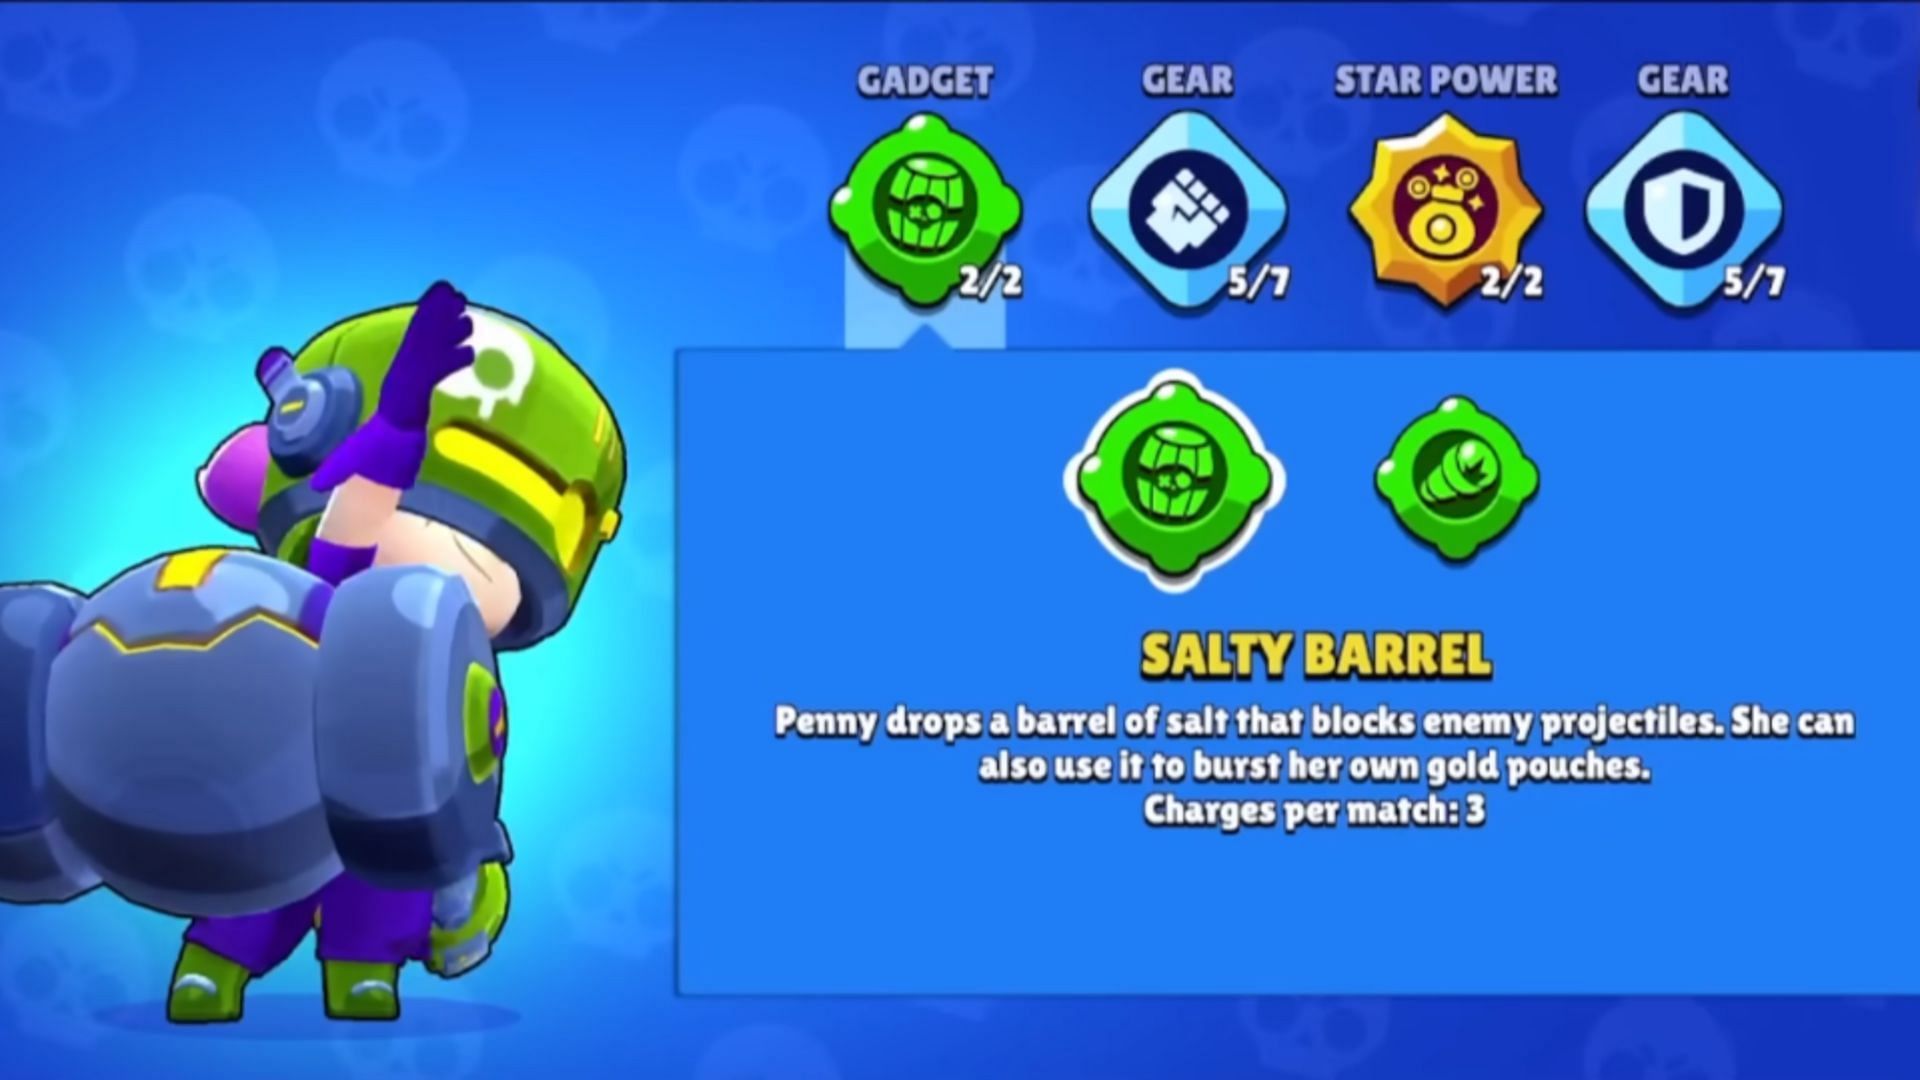 Salty Barrel Gadget (Image via Supercell)